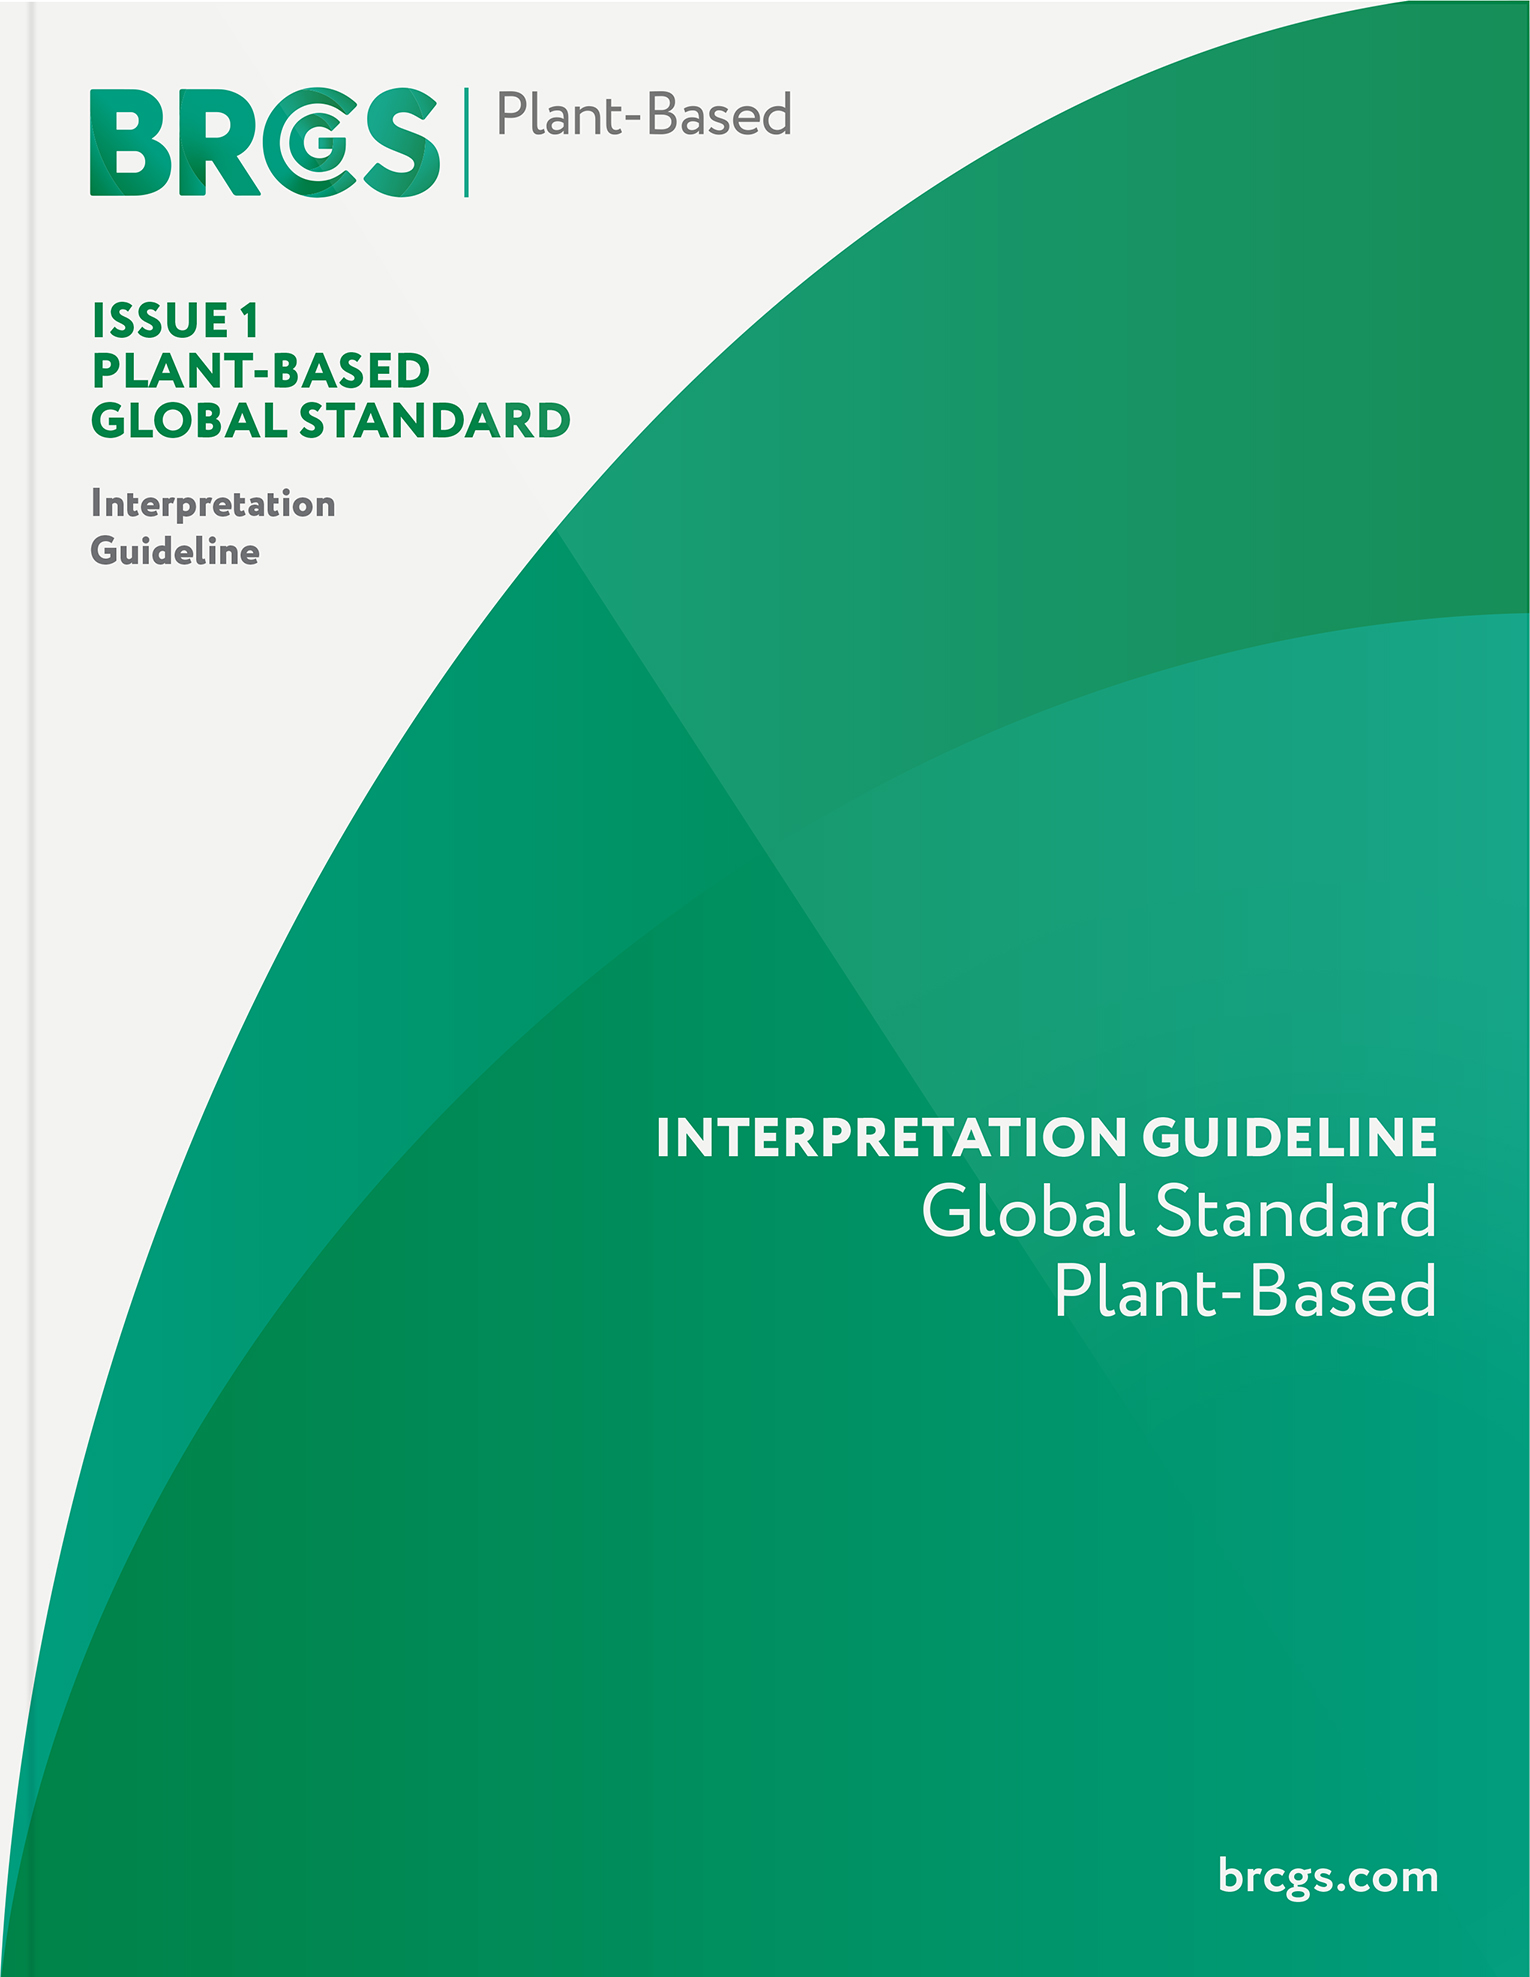 BRCGS Plant-Based Issue 1 Interpretation Guidelines